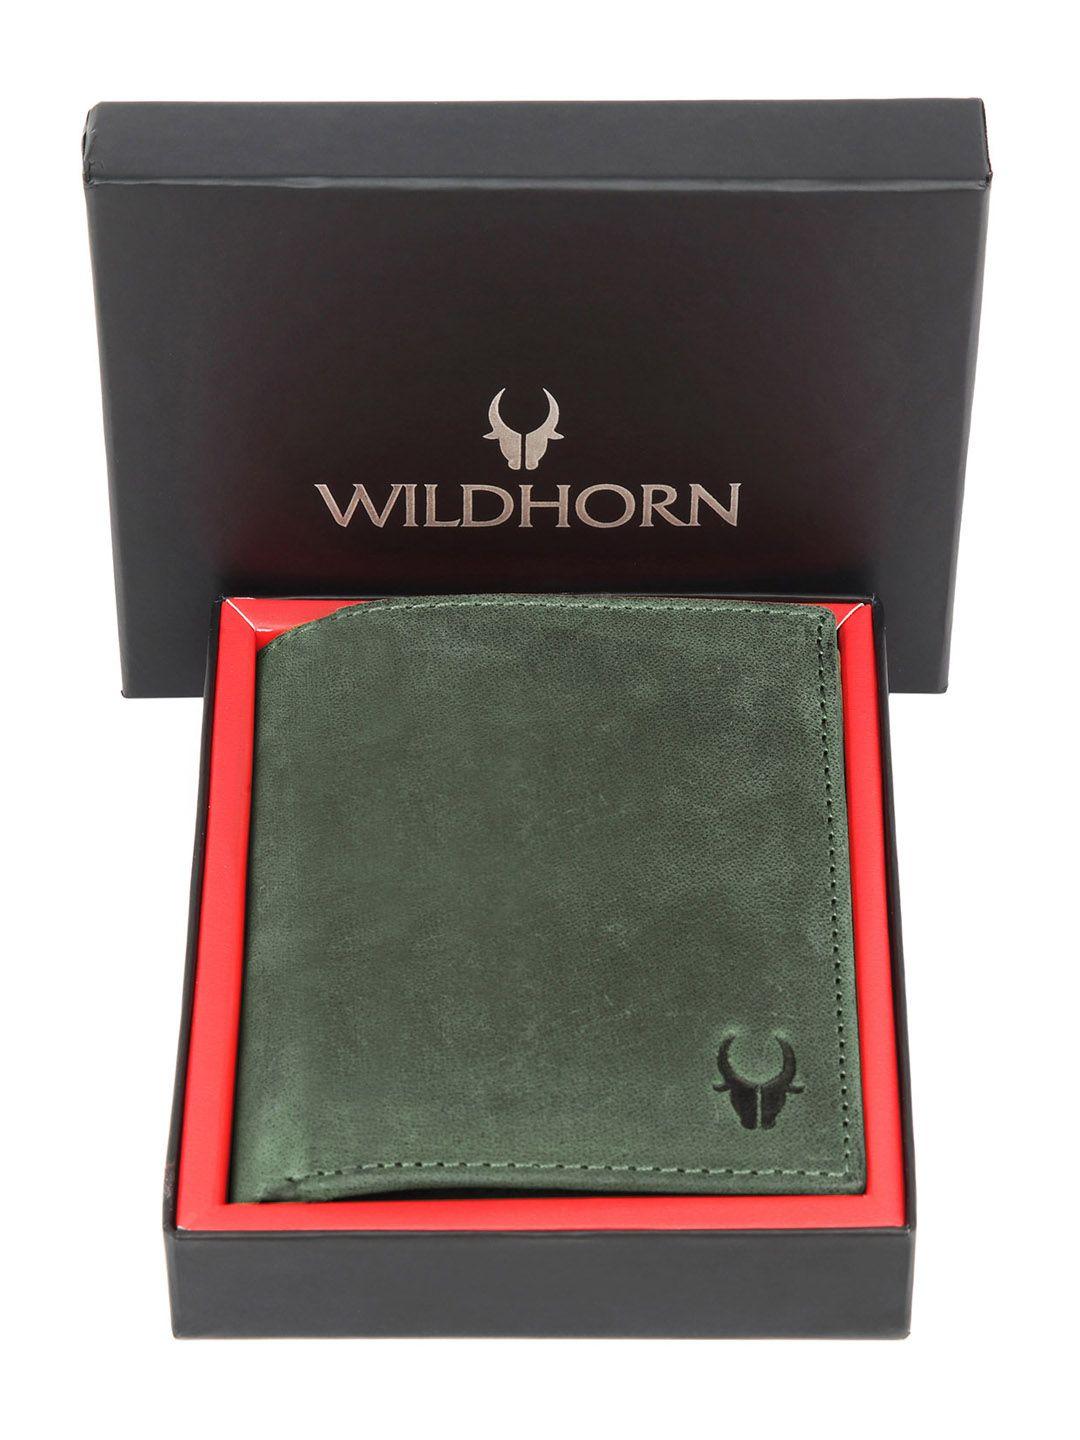 wildhorn unisex green leather card holder